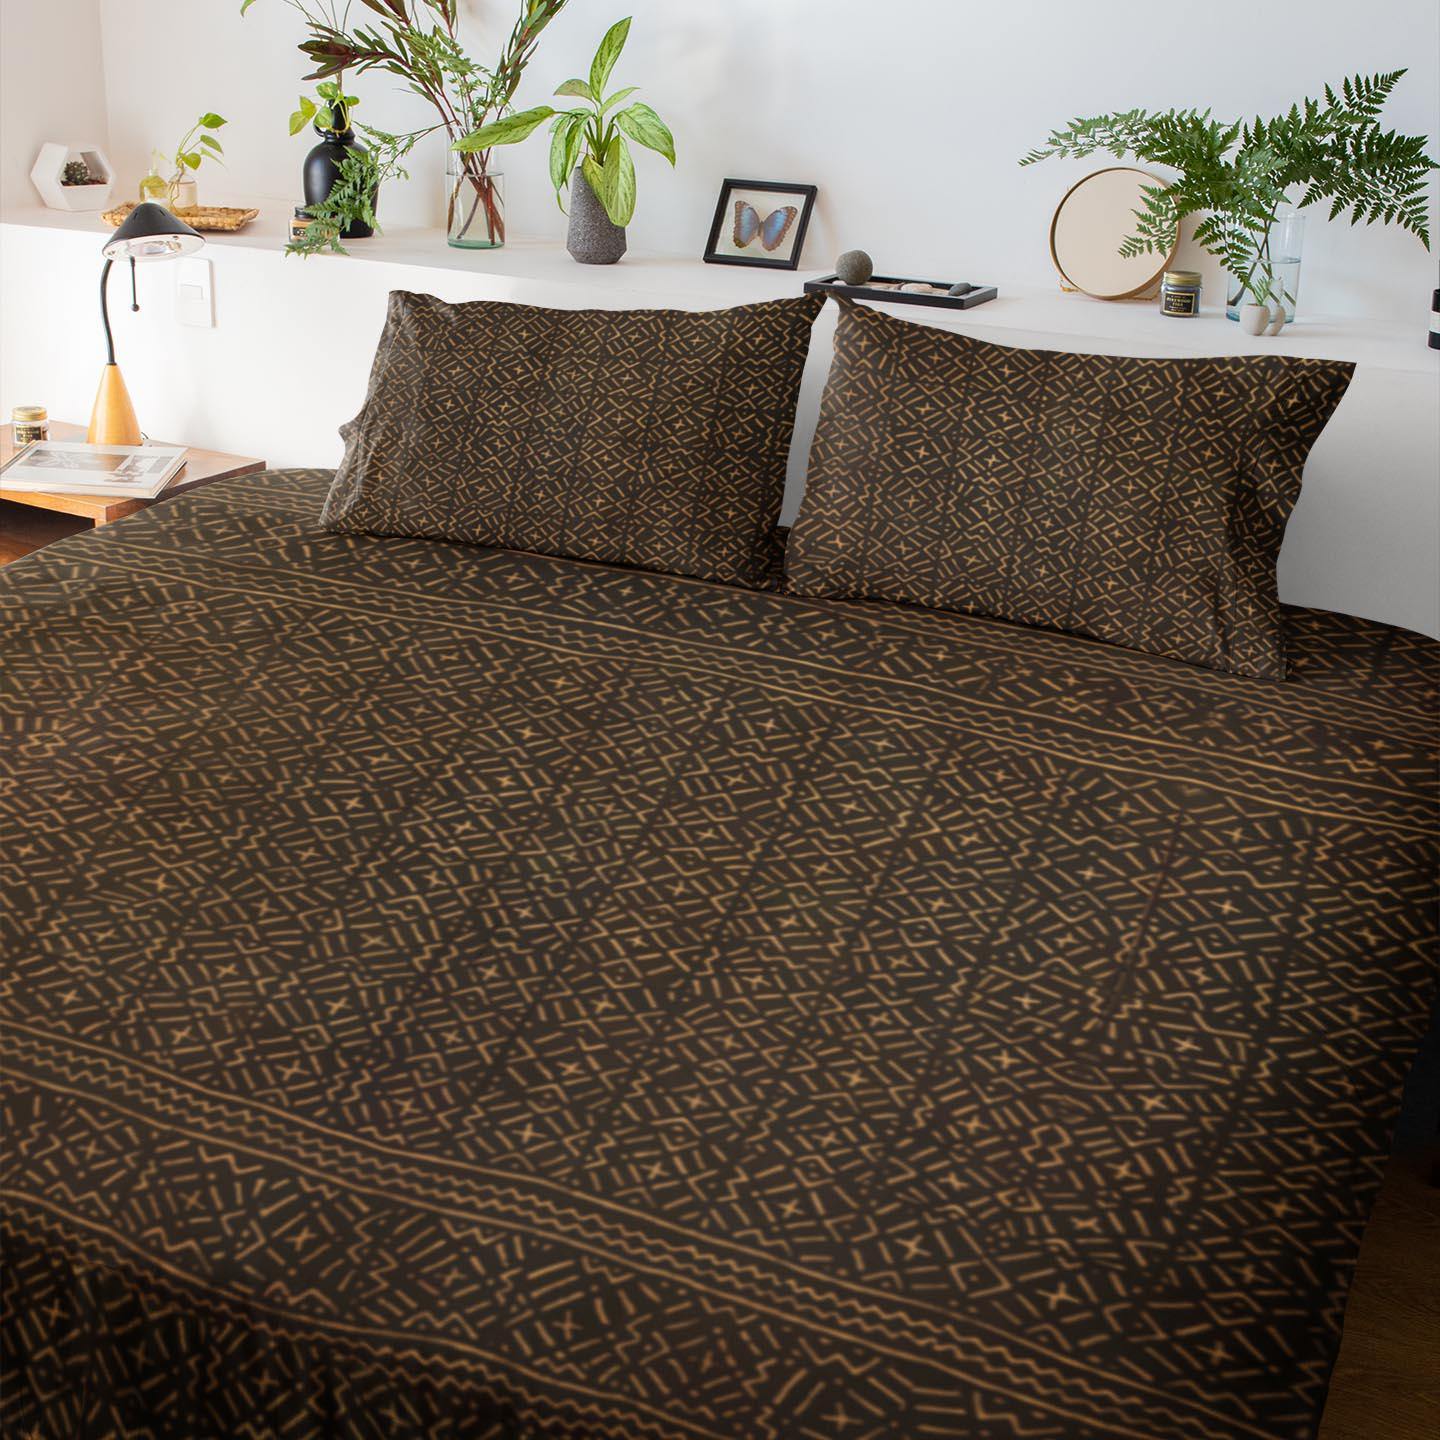 Bedding sets Bedding Set, Mali Mudcloth Traditional African Design